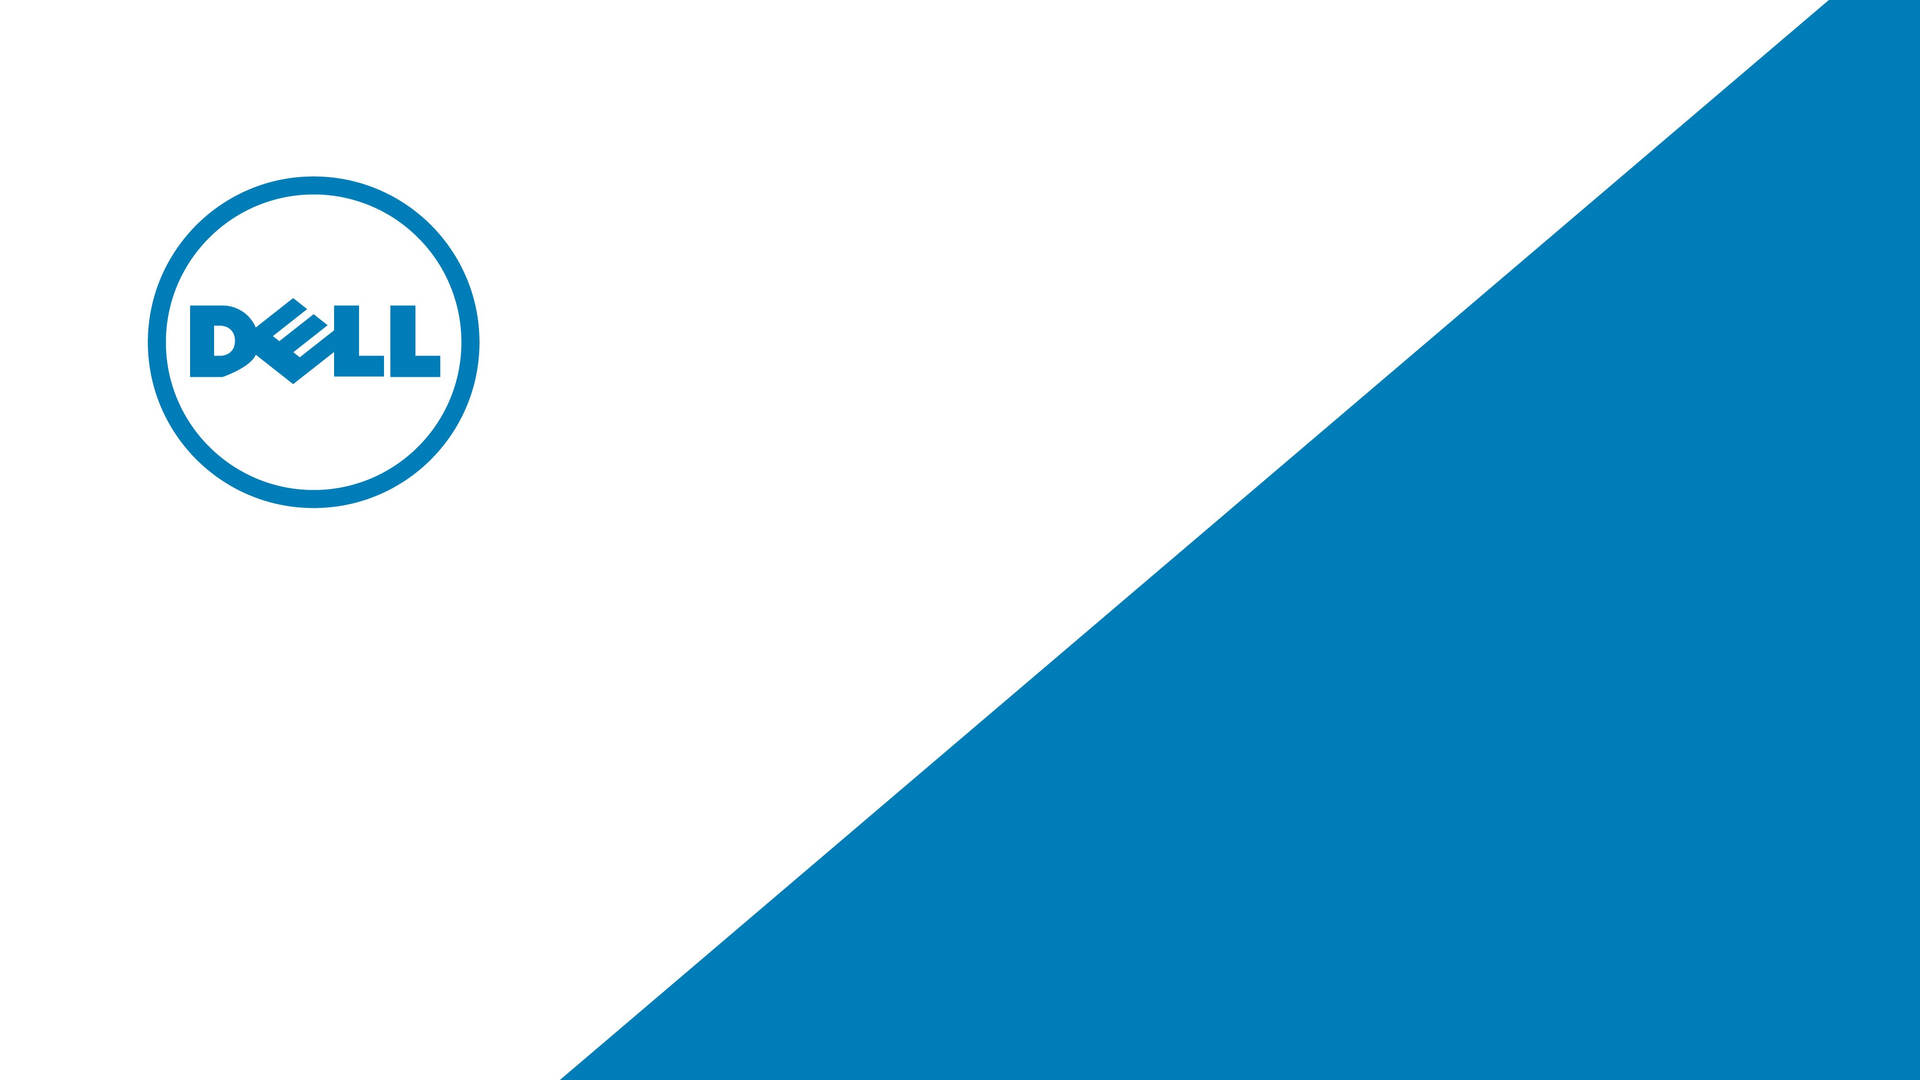 4k White And Blue Dell Logo Background